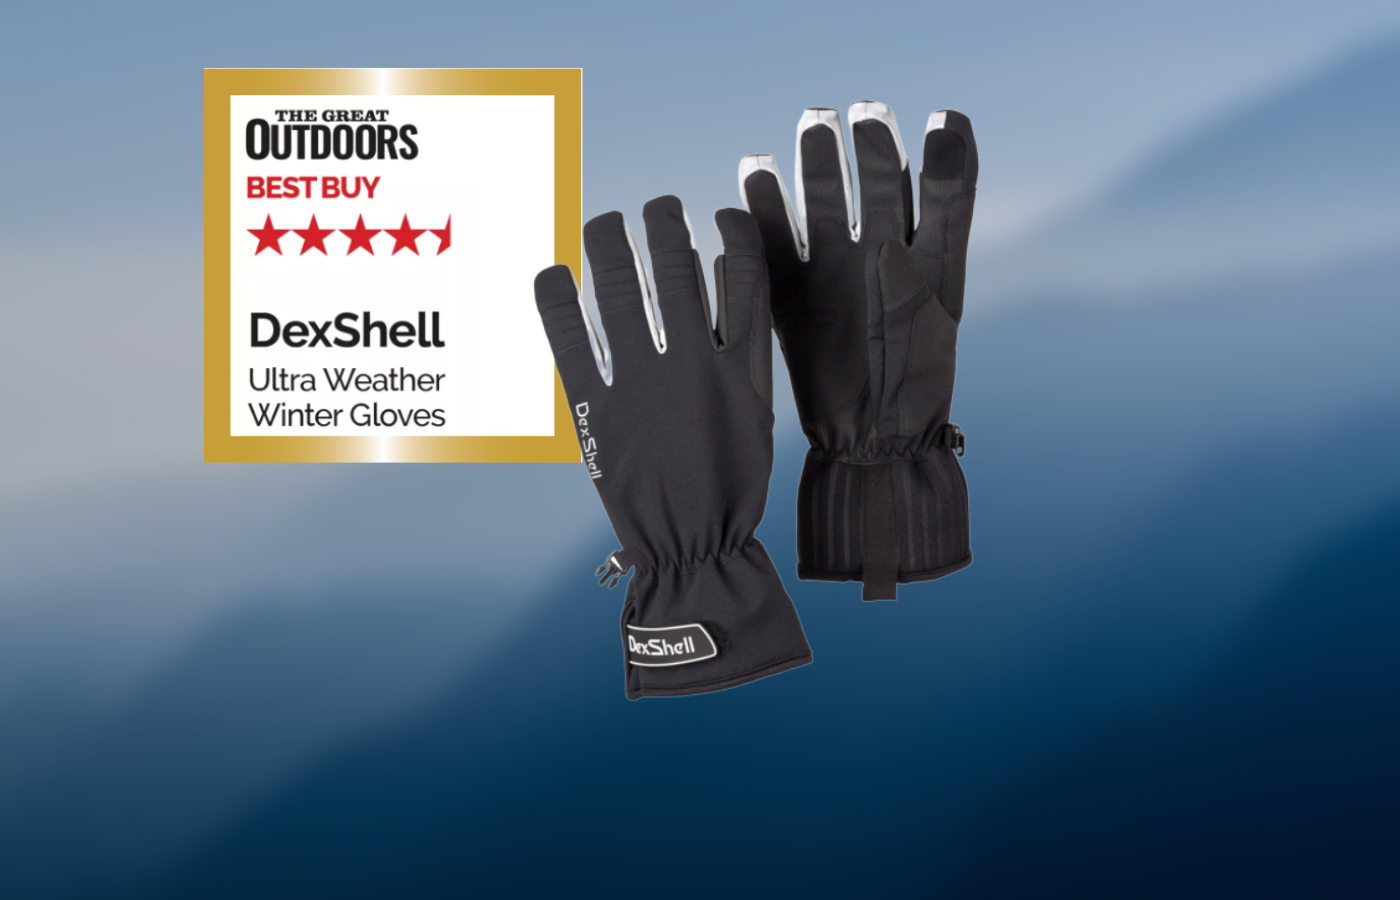 DexShell Ultra Weather Winter Gloves rating